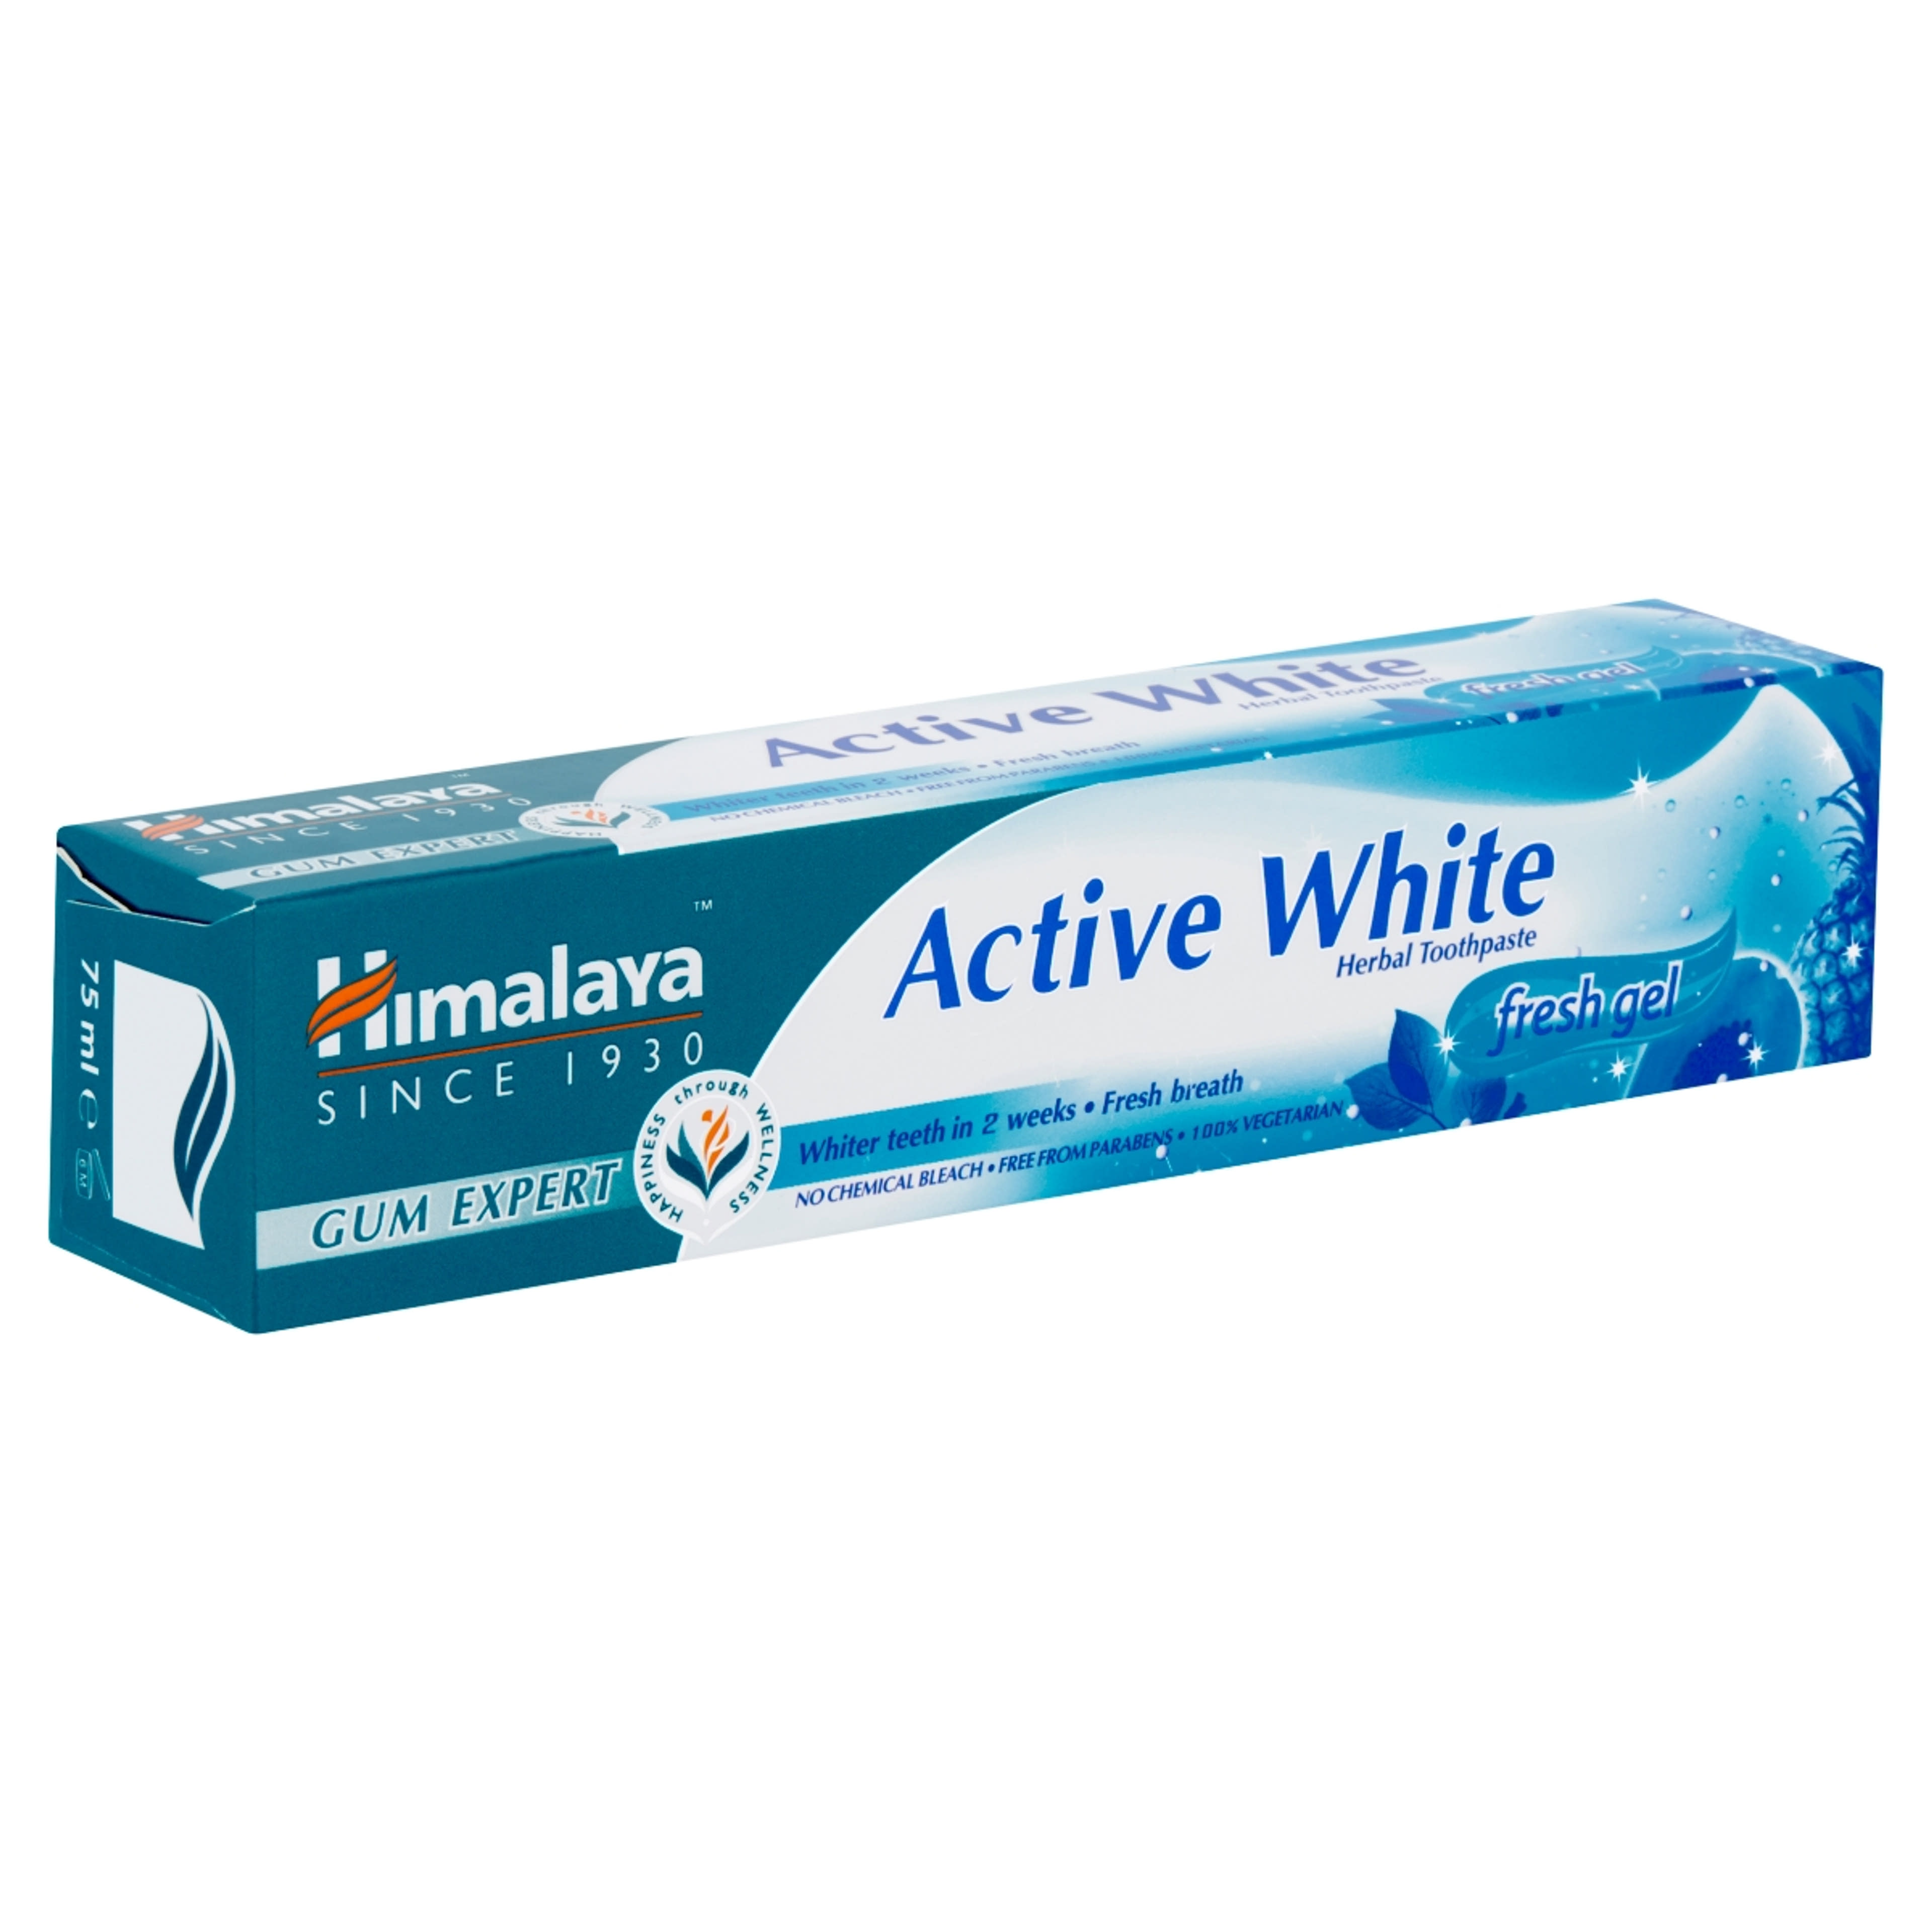 Himalaya Active White fogkrém - 75 ml-3